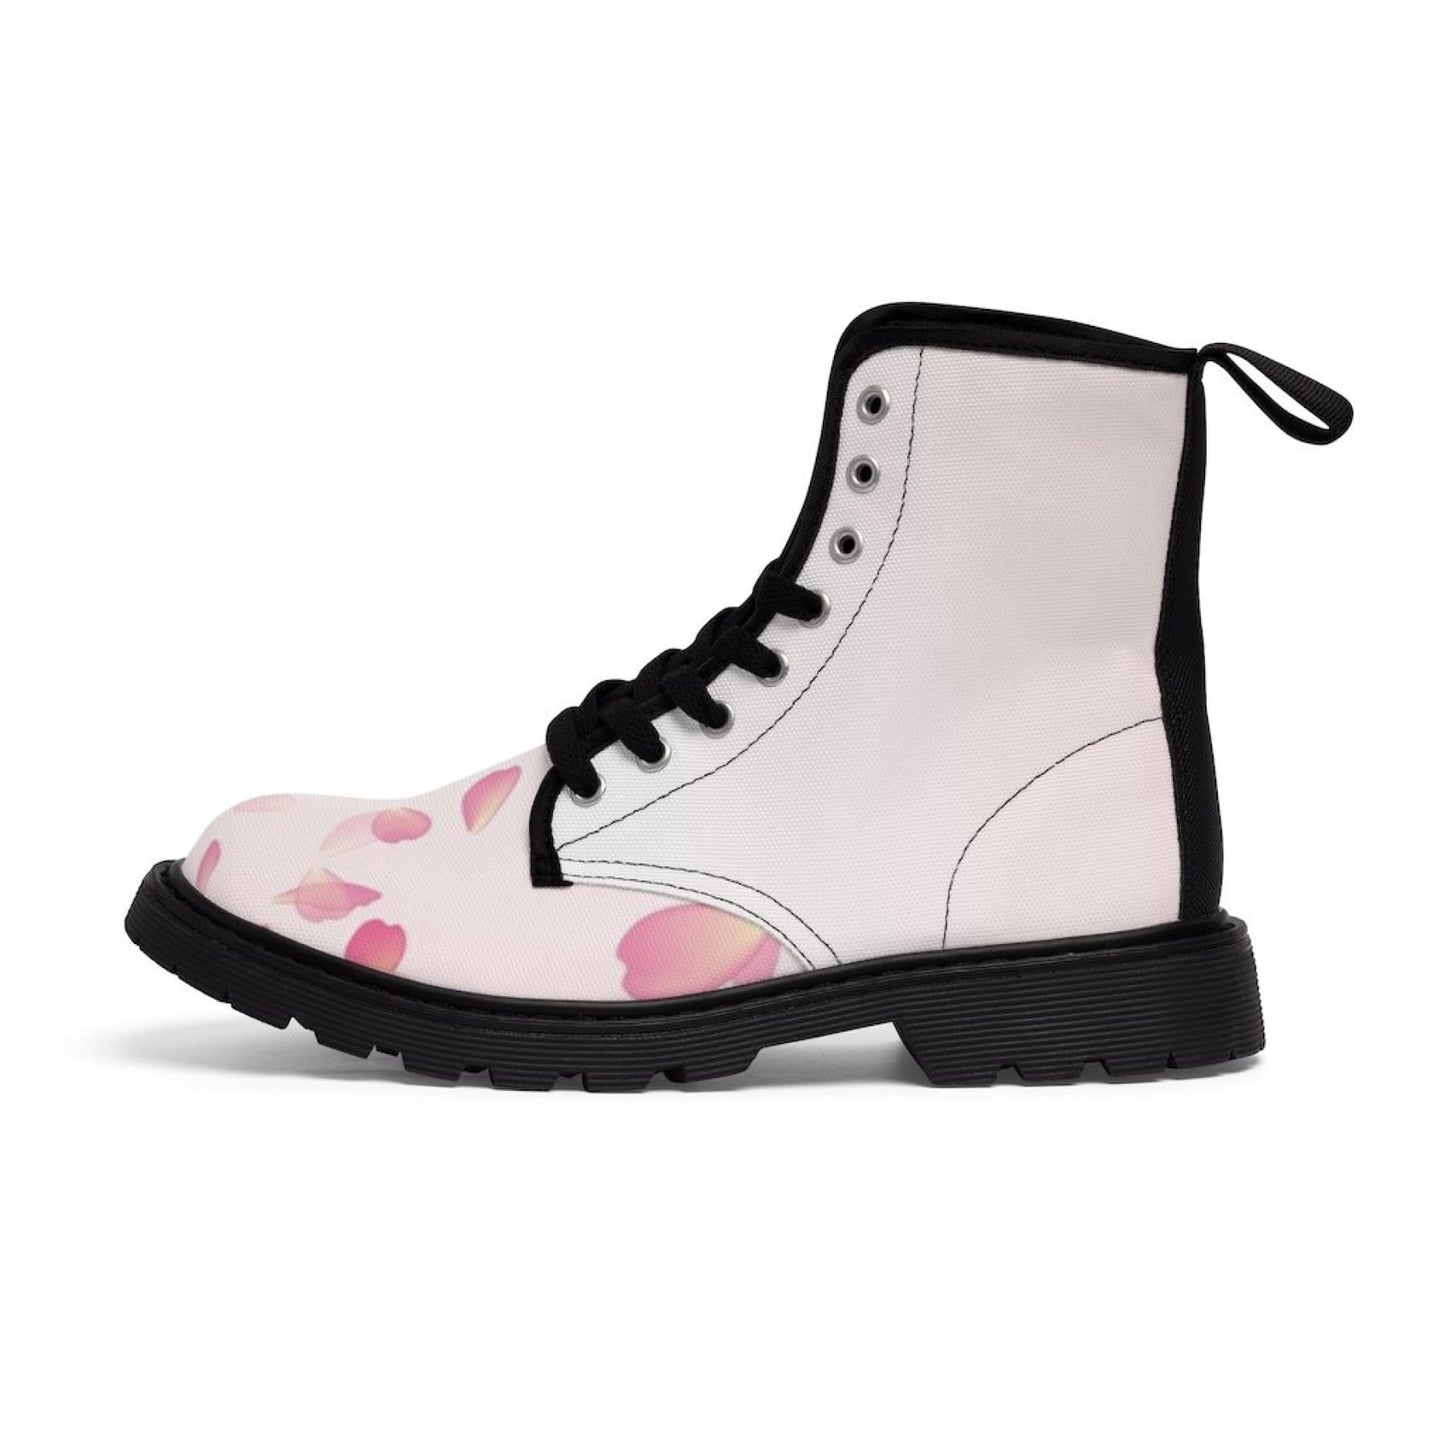 Sakura Dream, Cherry Blossom, Women's Boots